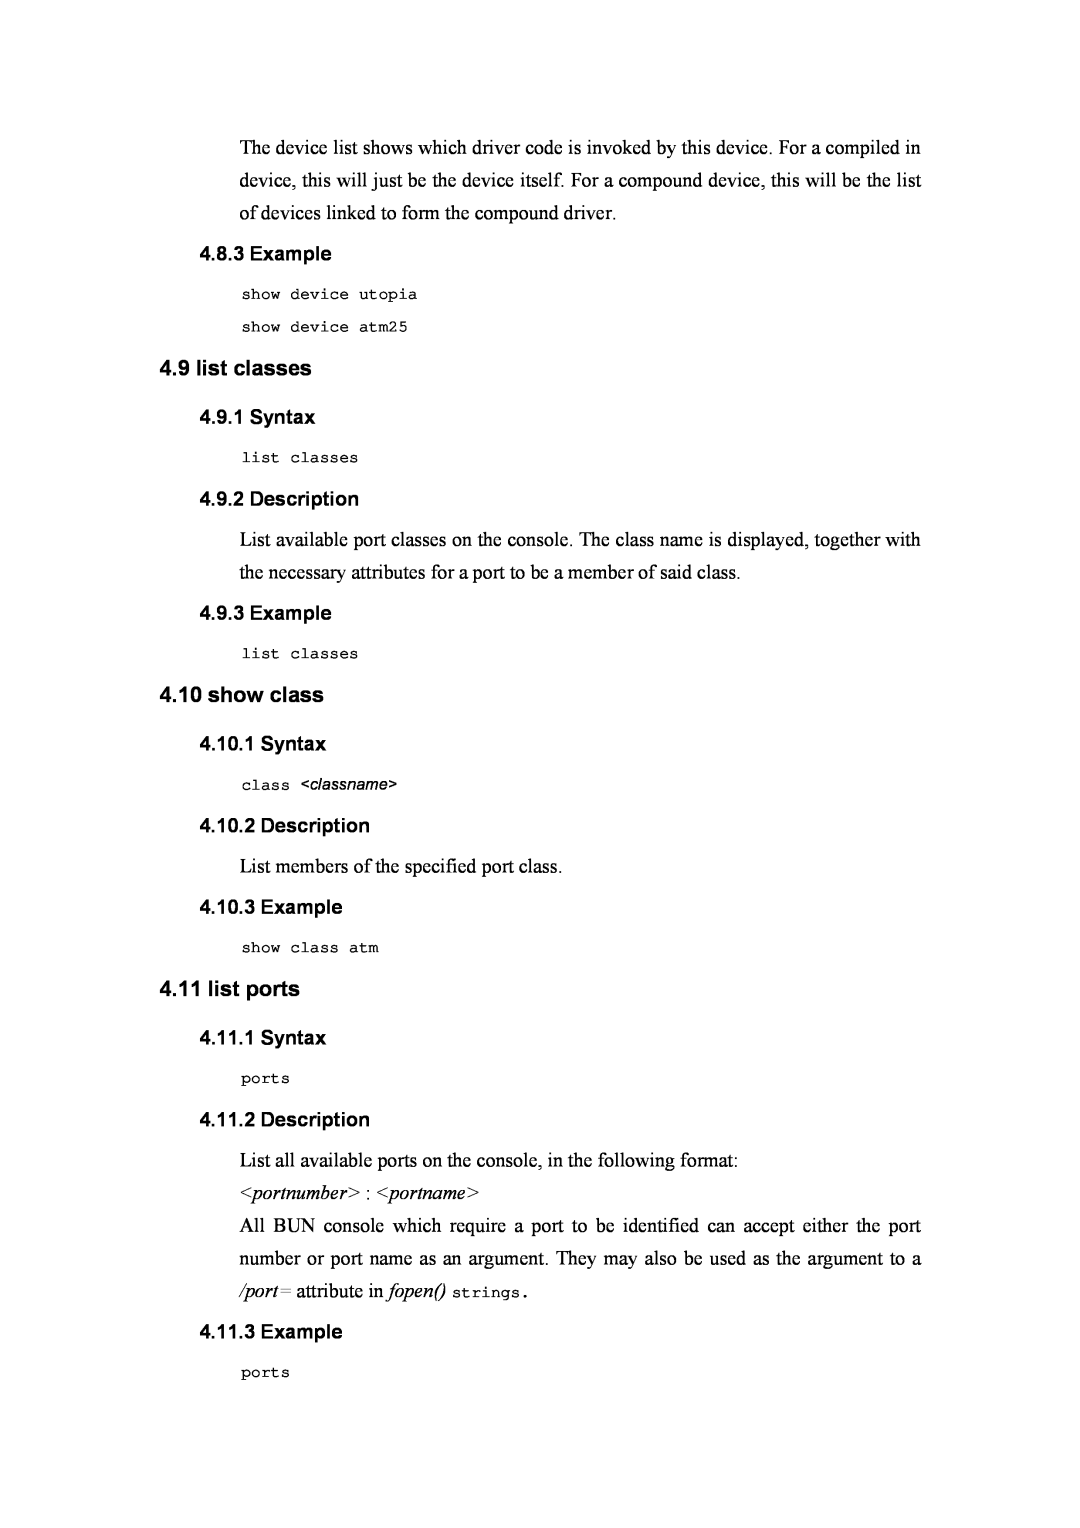 Atlantis Land A02-RA(Atmos)_ME01 manual list classes, show class, list ports, Example, Syntax, Description 